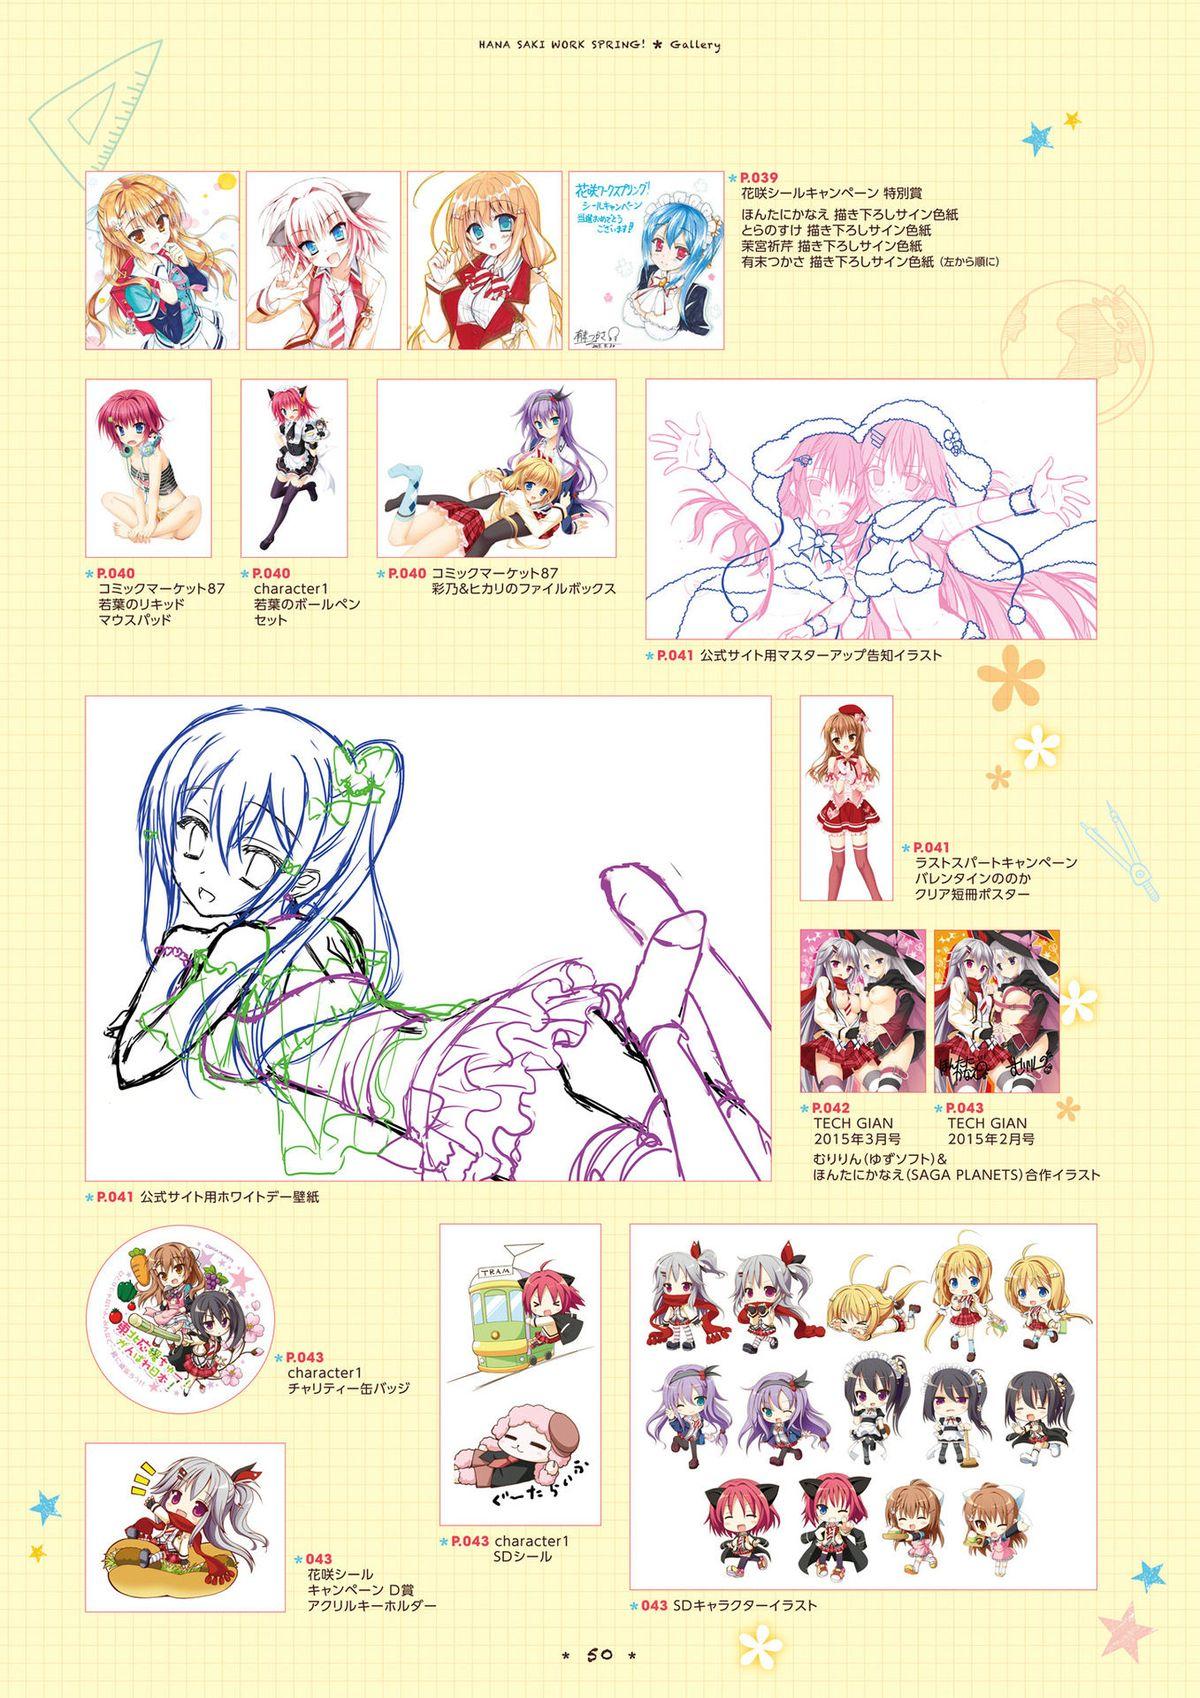 Hanasaki Work Spring! Visual Fanbook 47